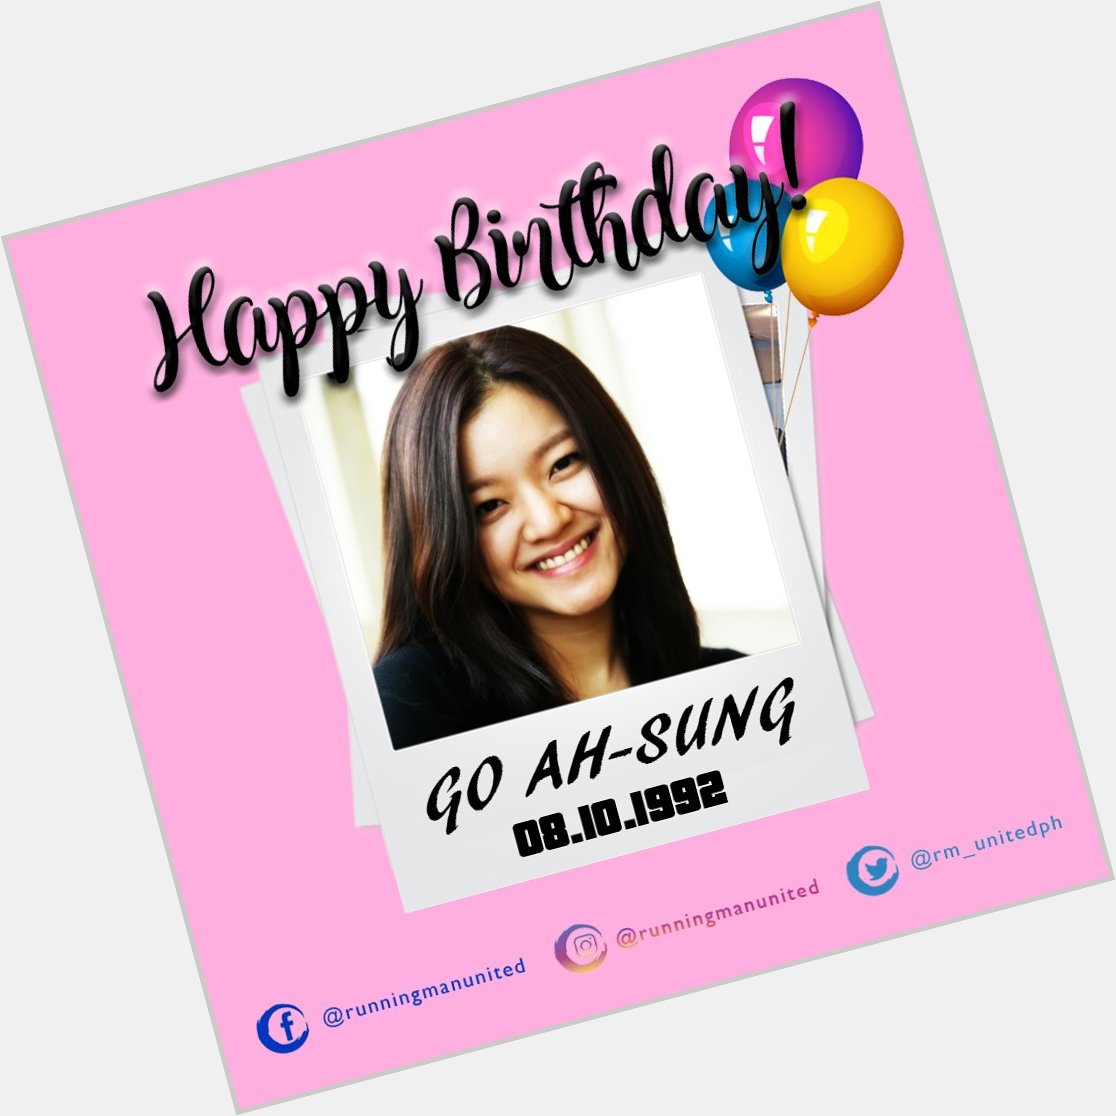 Happy Birthday Go Ah-sung! 